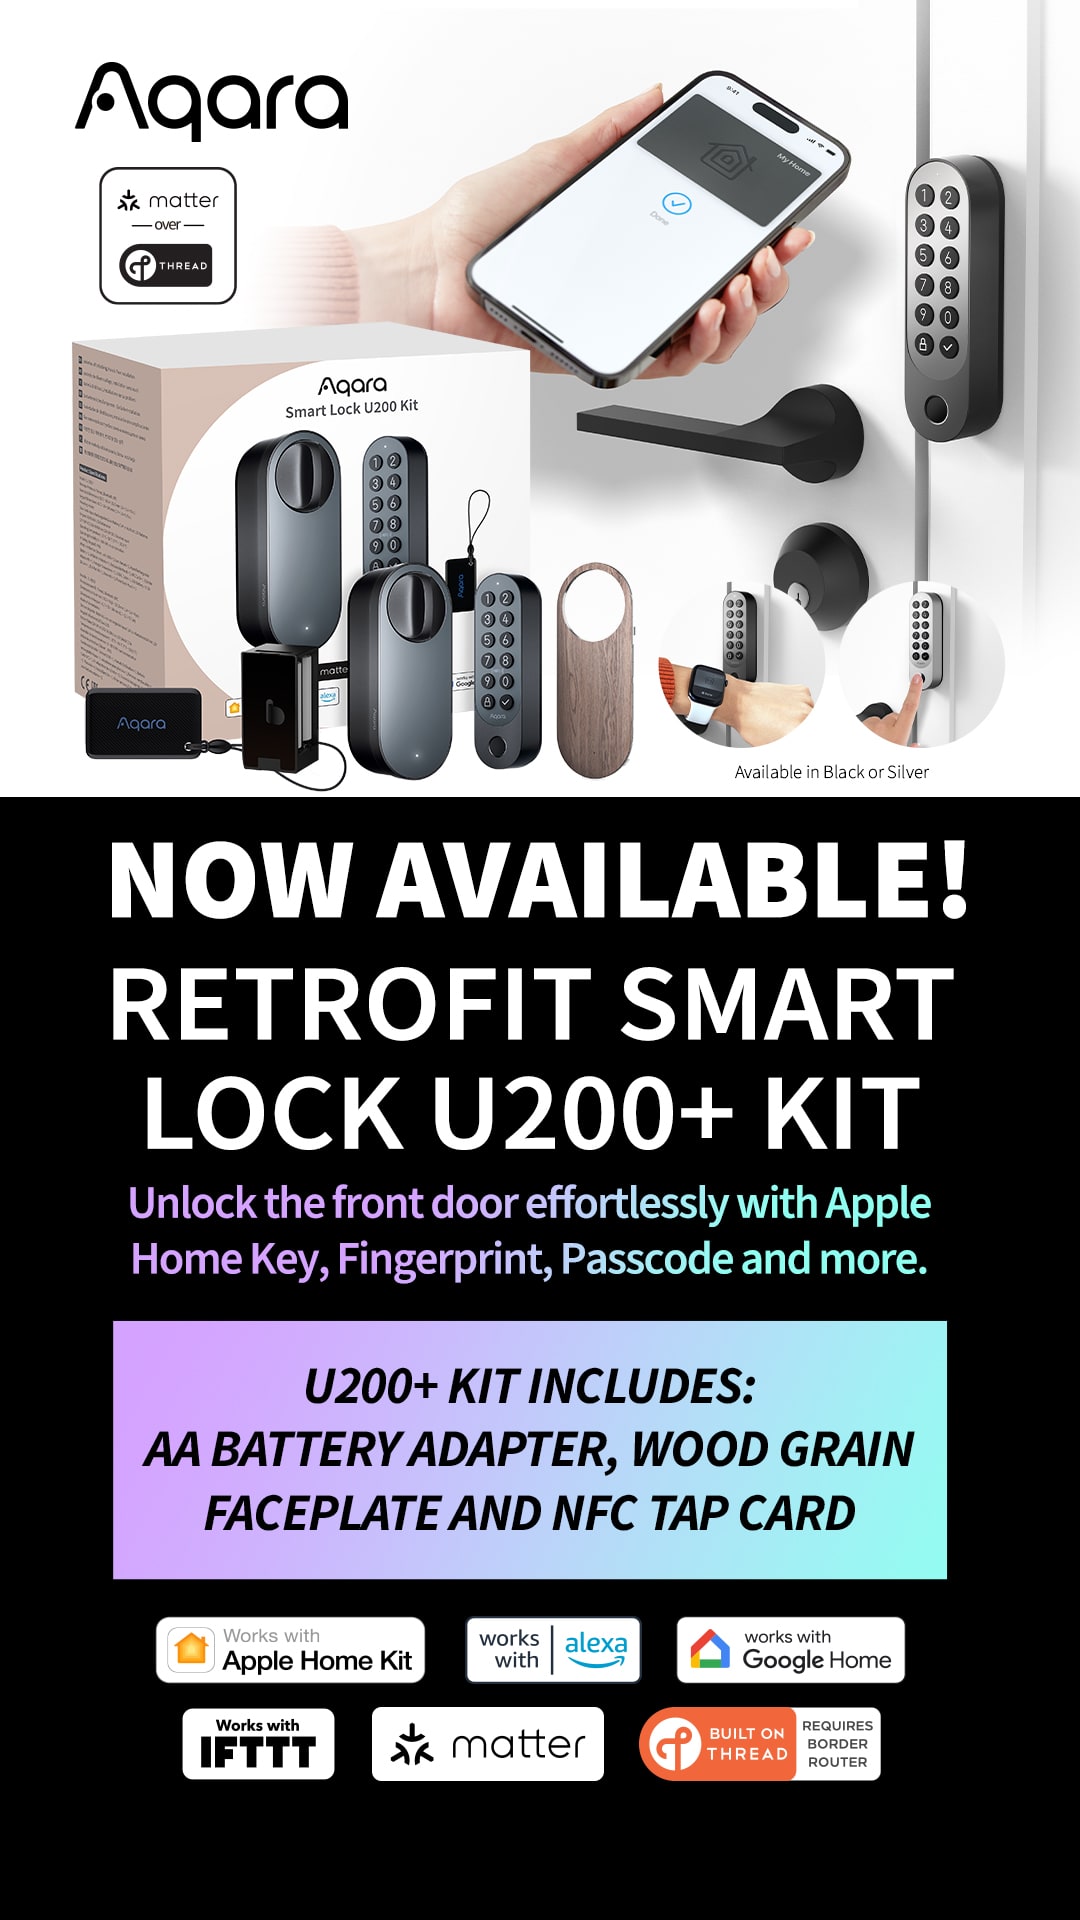 Aqara Smart Lock U200 Now Available